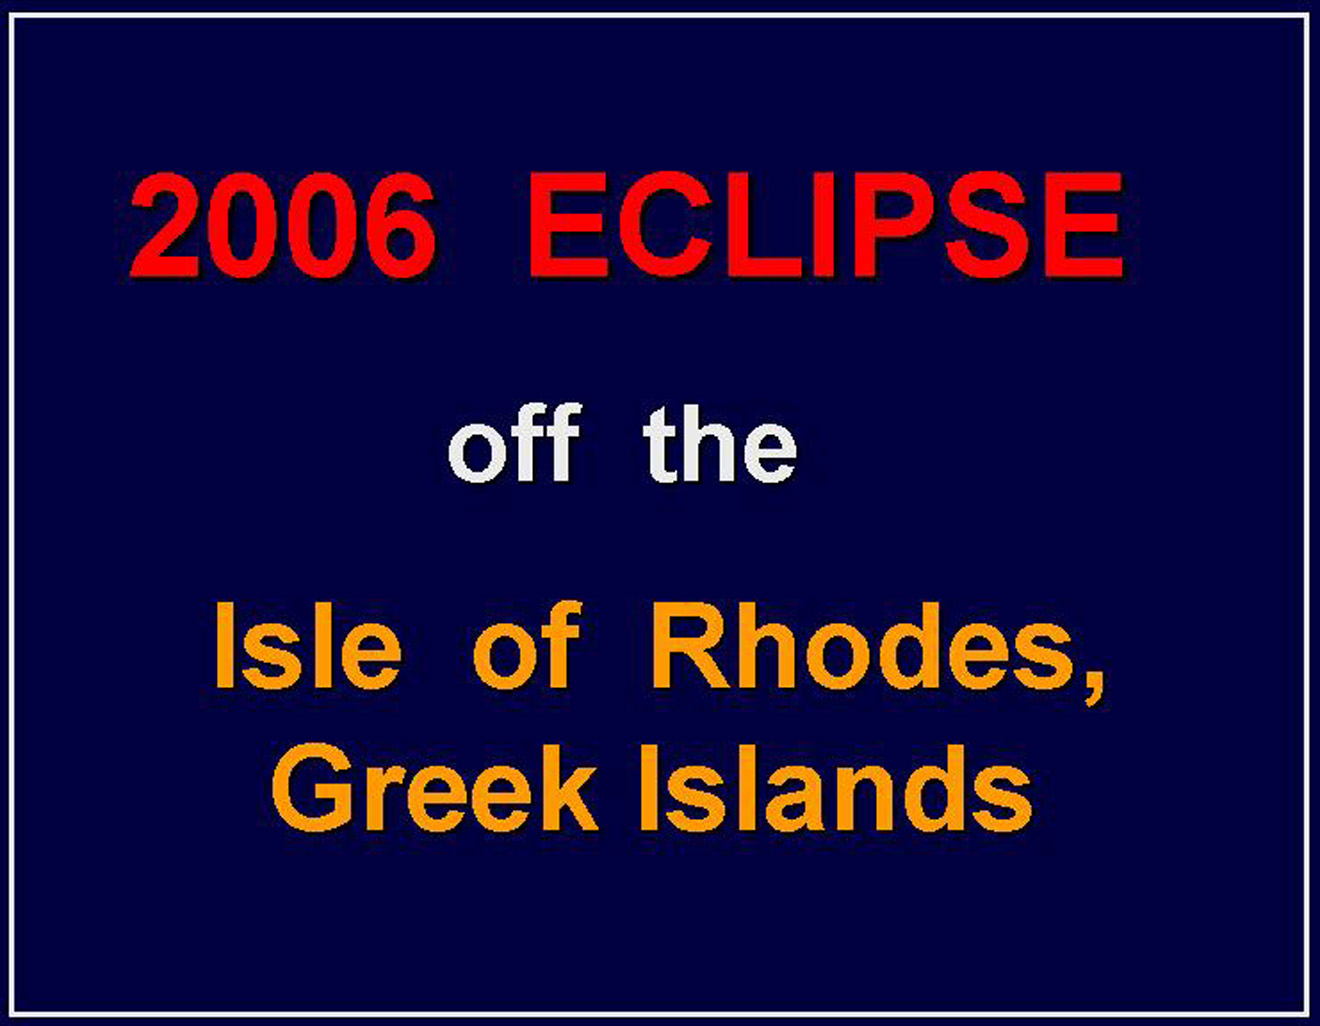 Eclipse 2006 - AA1 - Slide16 - Title